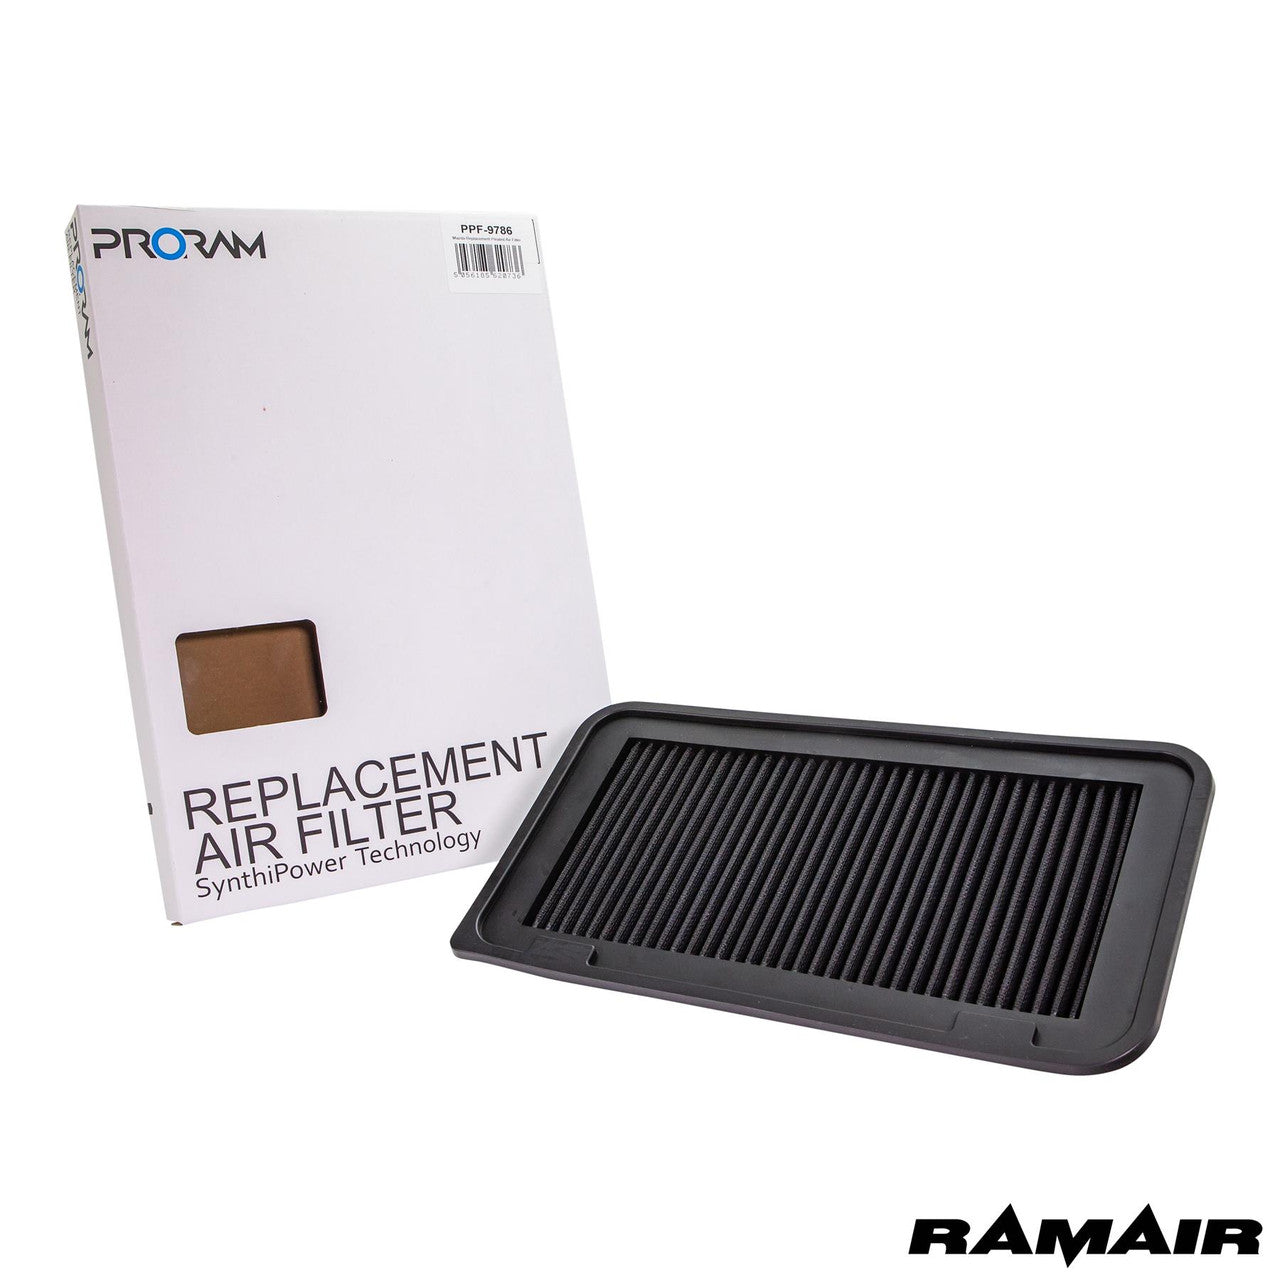 MX-5 ND - PRORAM panel air filter